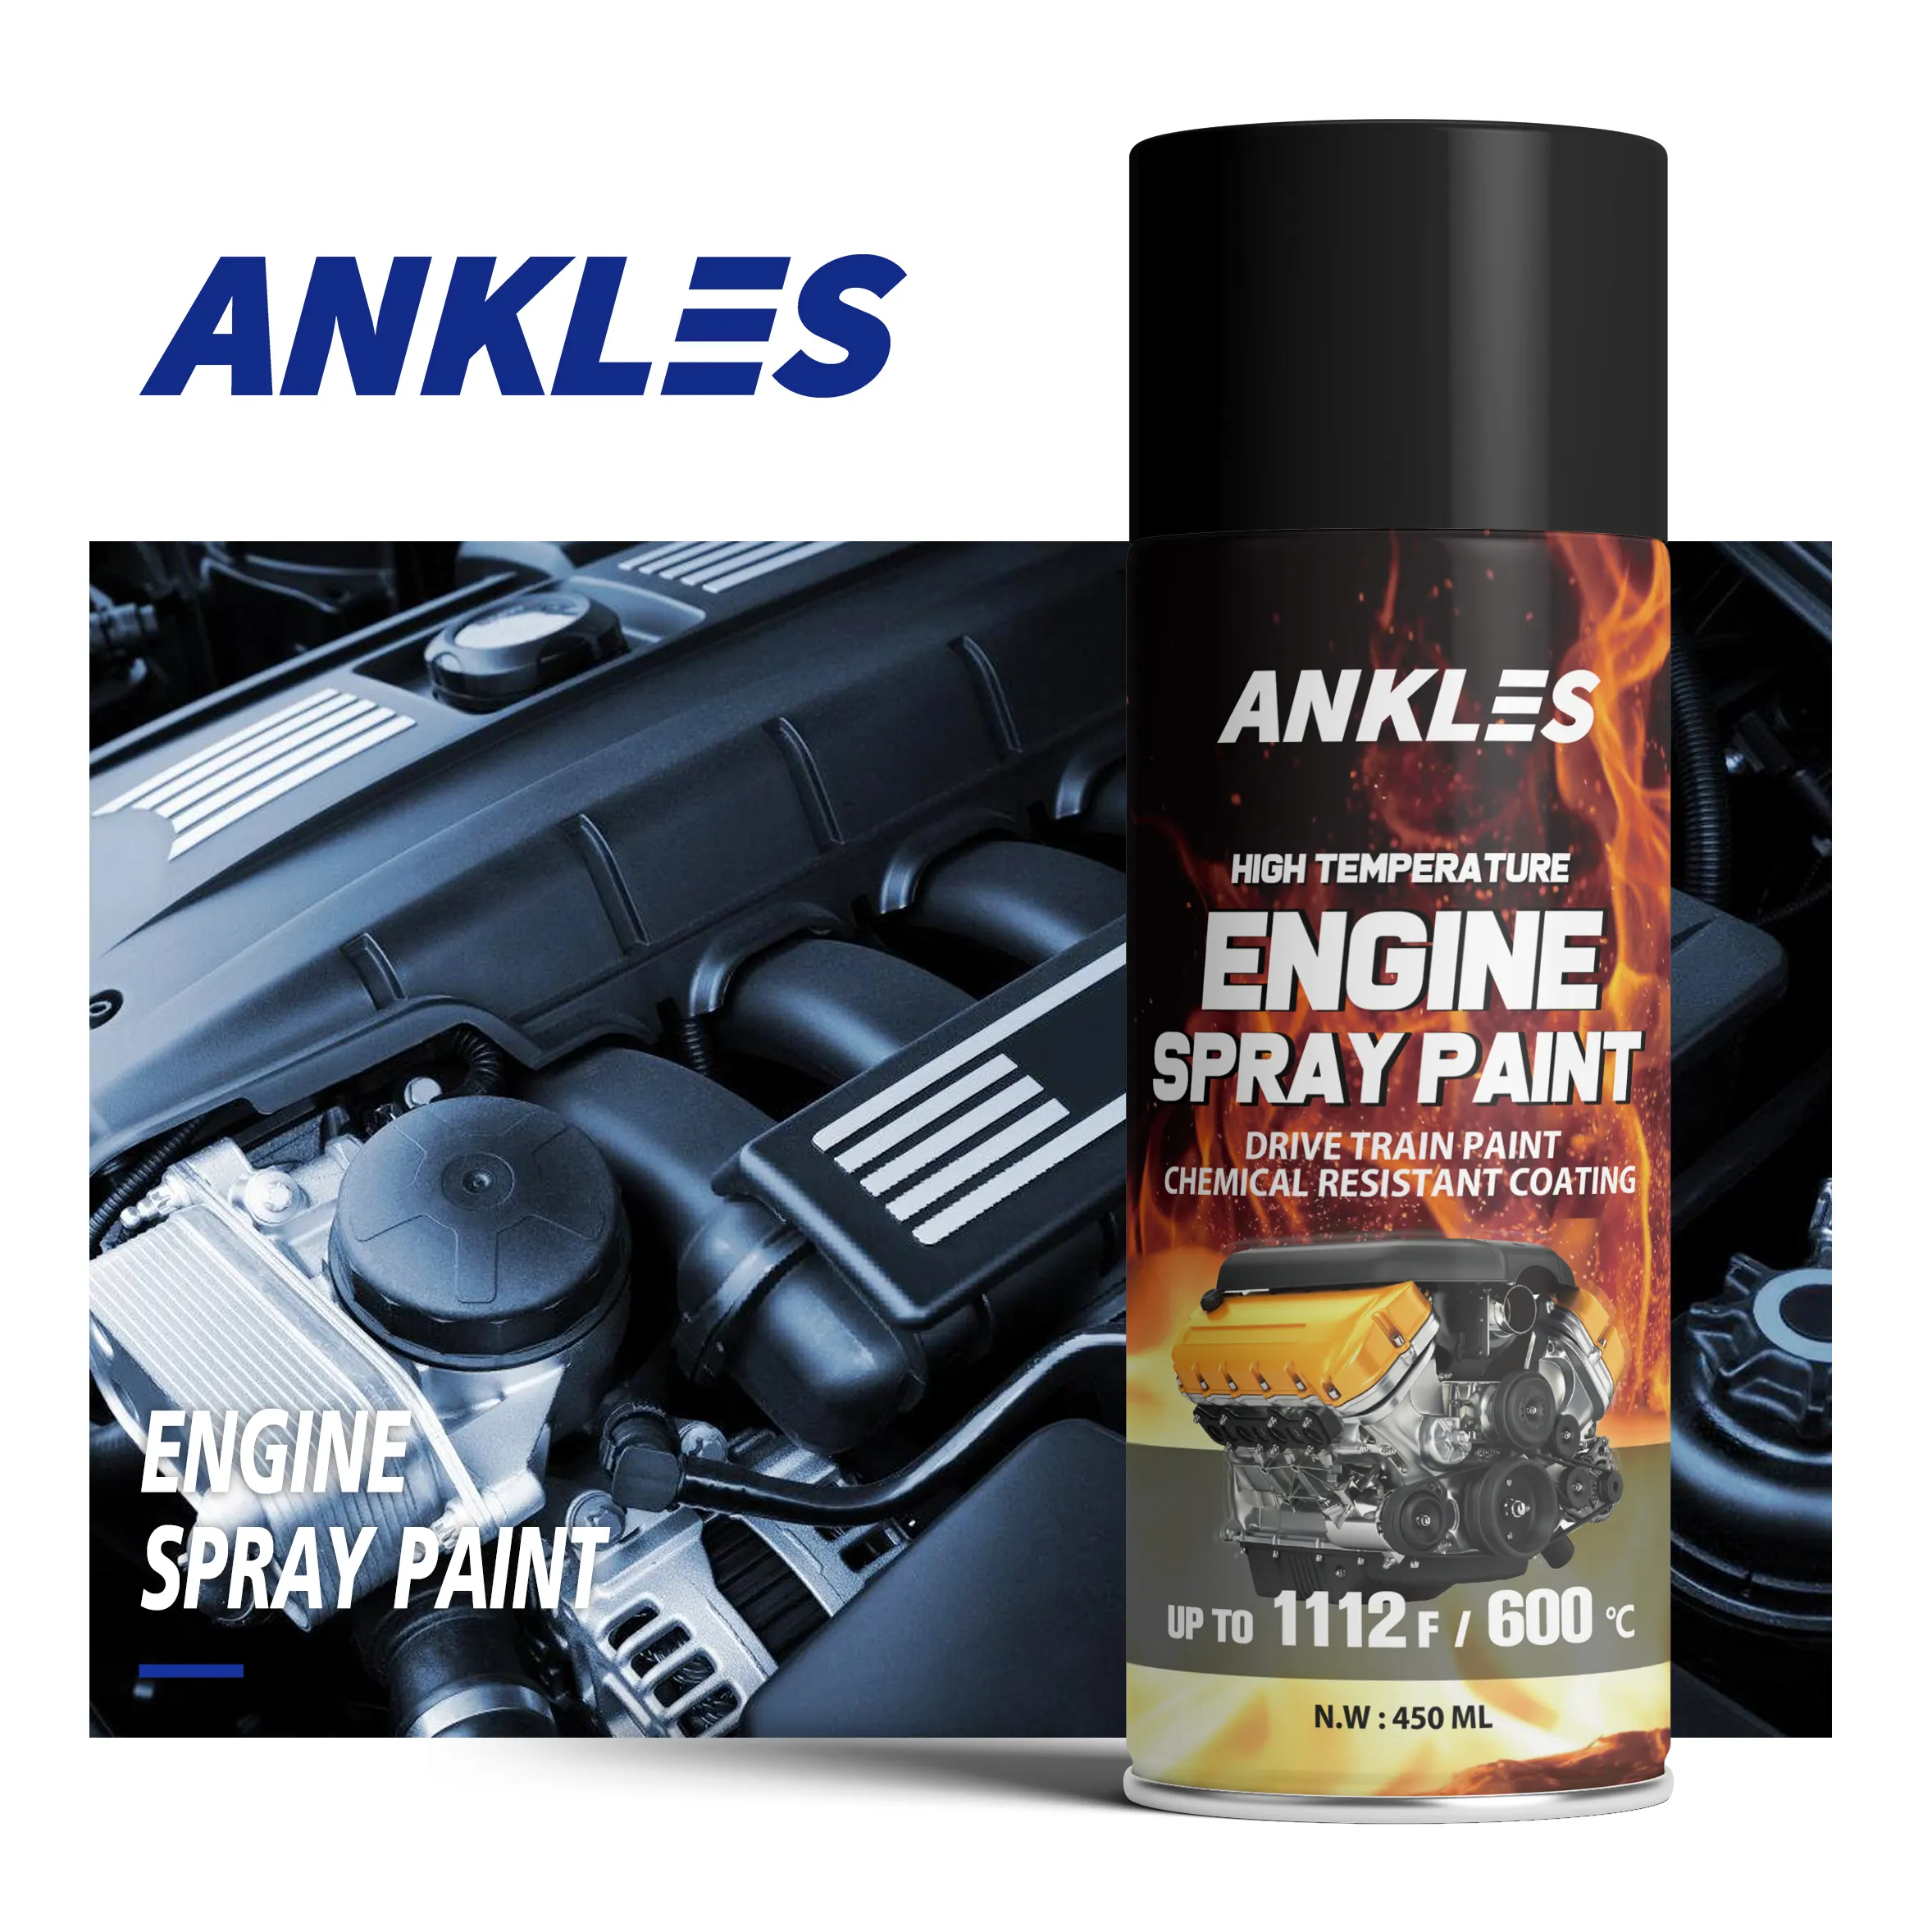 ANKLESホットセールスプレー温度エンジン高温ペイントシルバー高温スプレーペイント